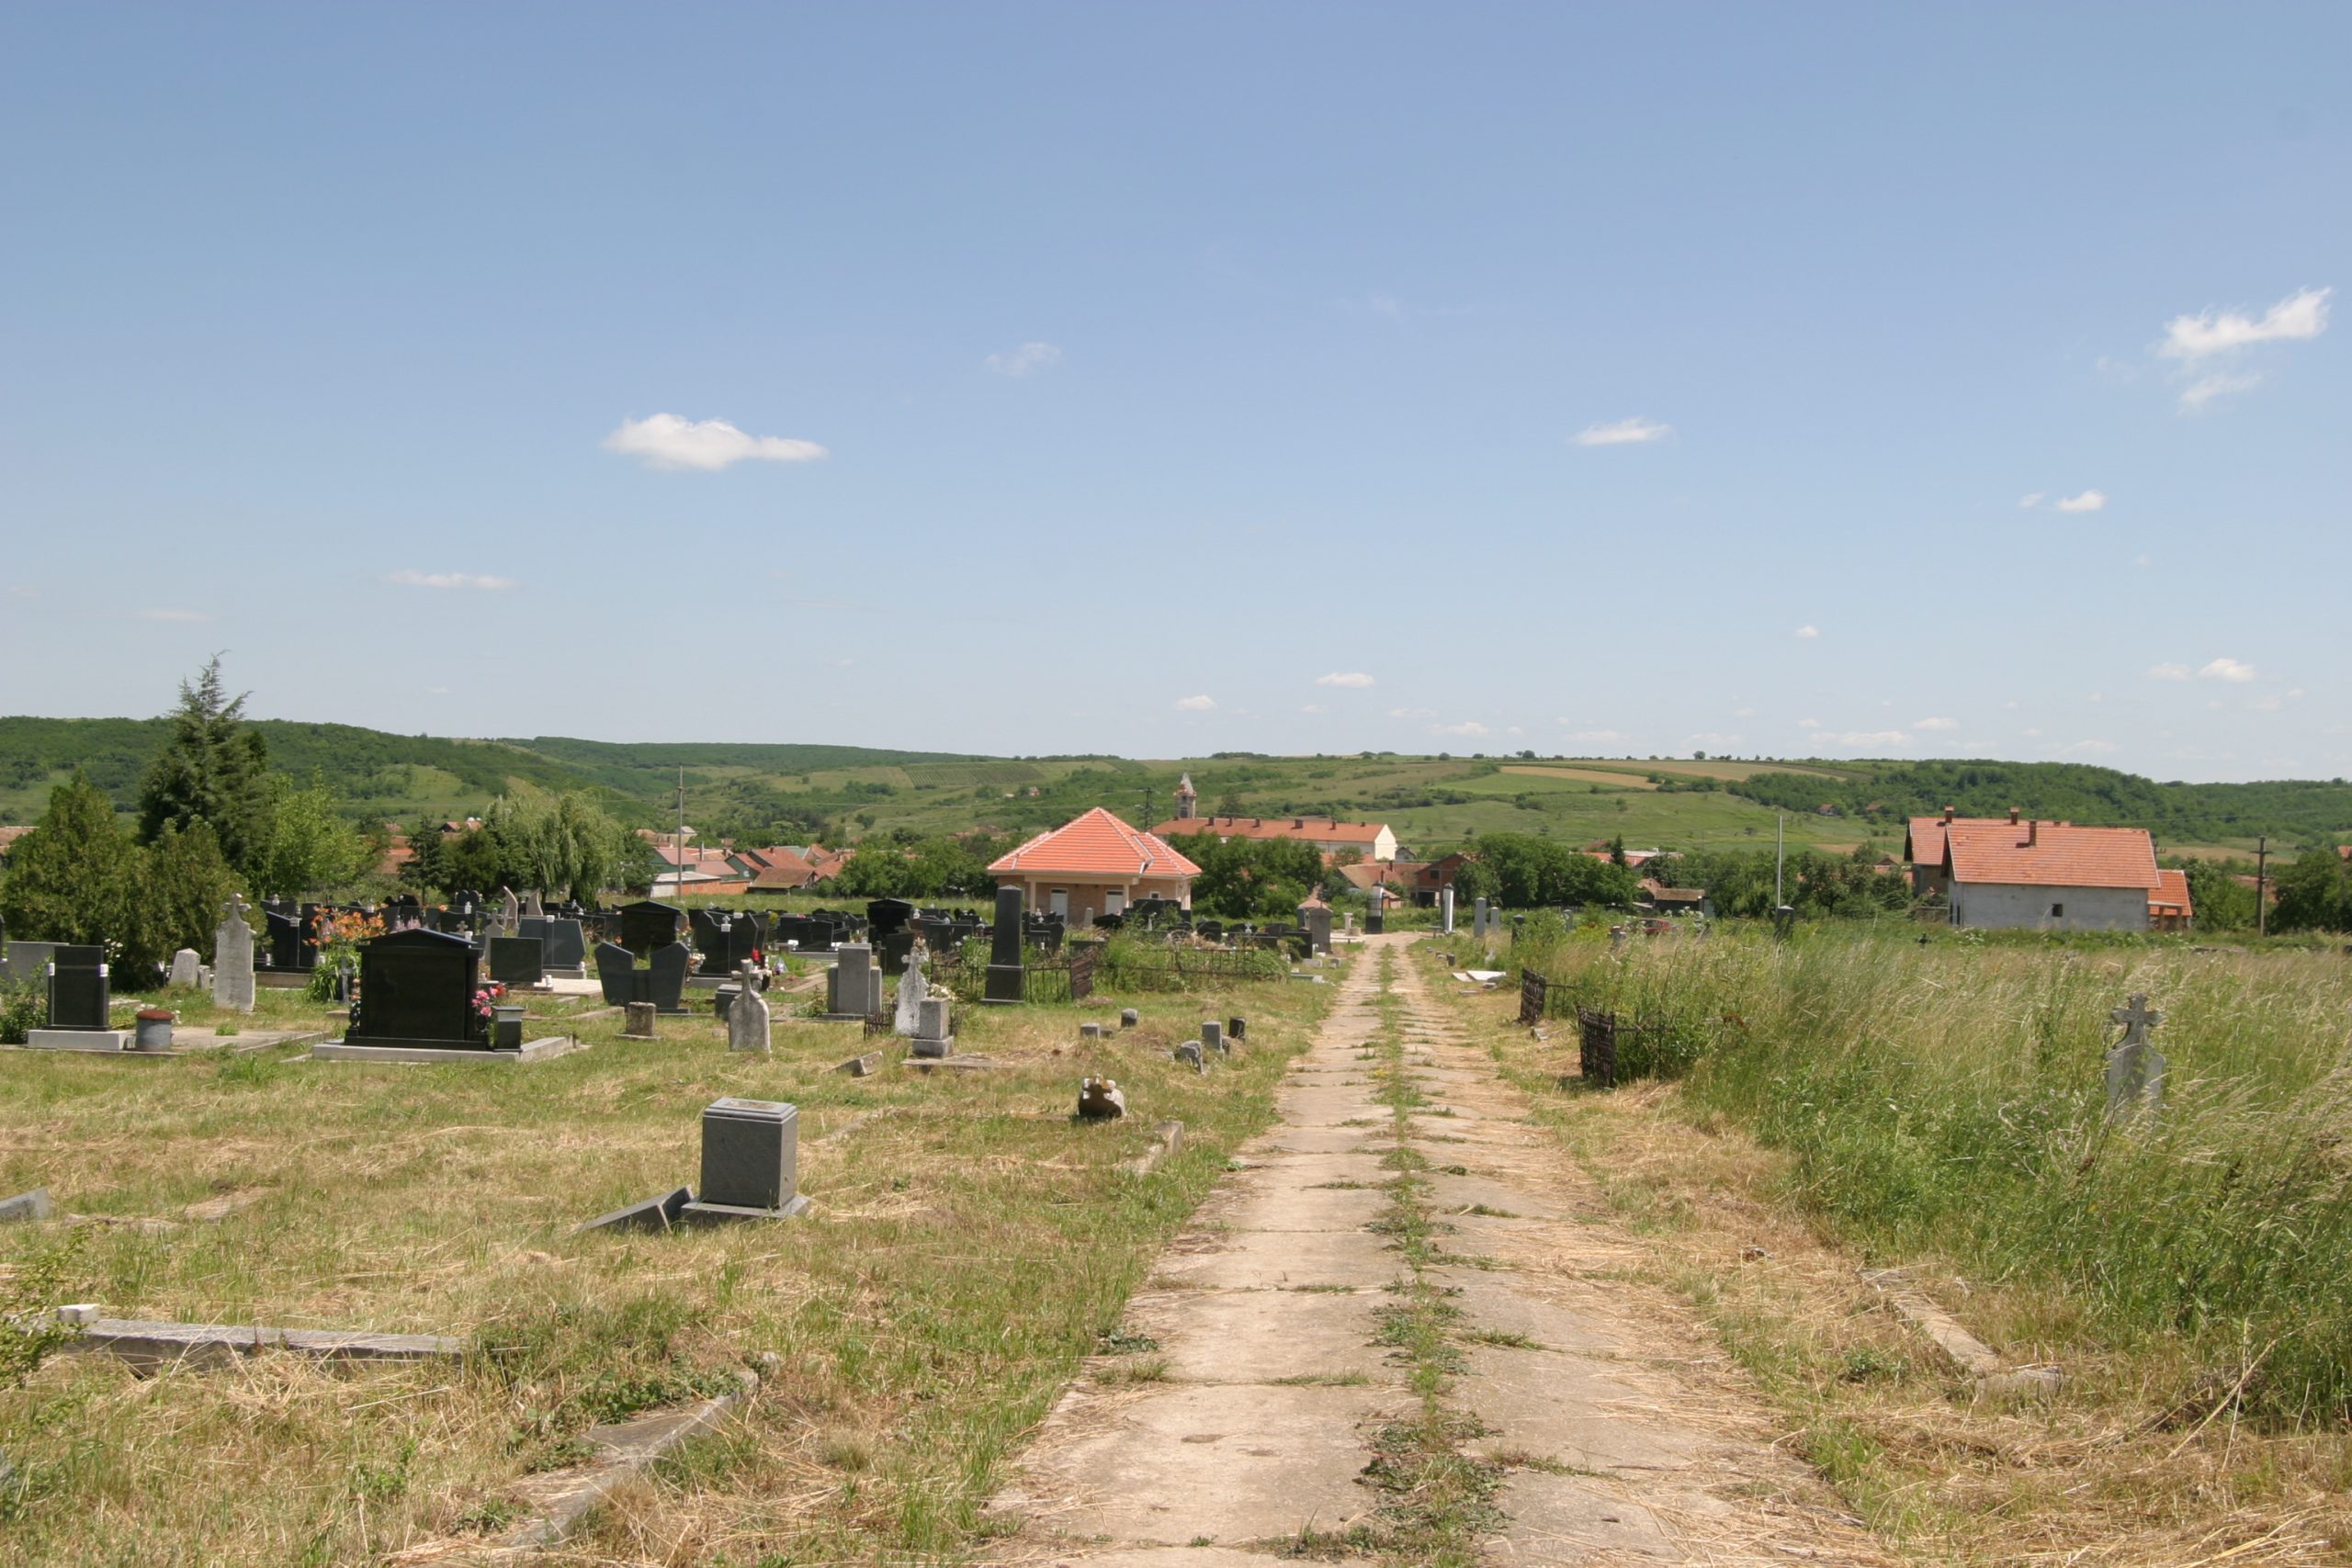 images/Kudritz Cemetery/IMG_0355